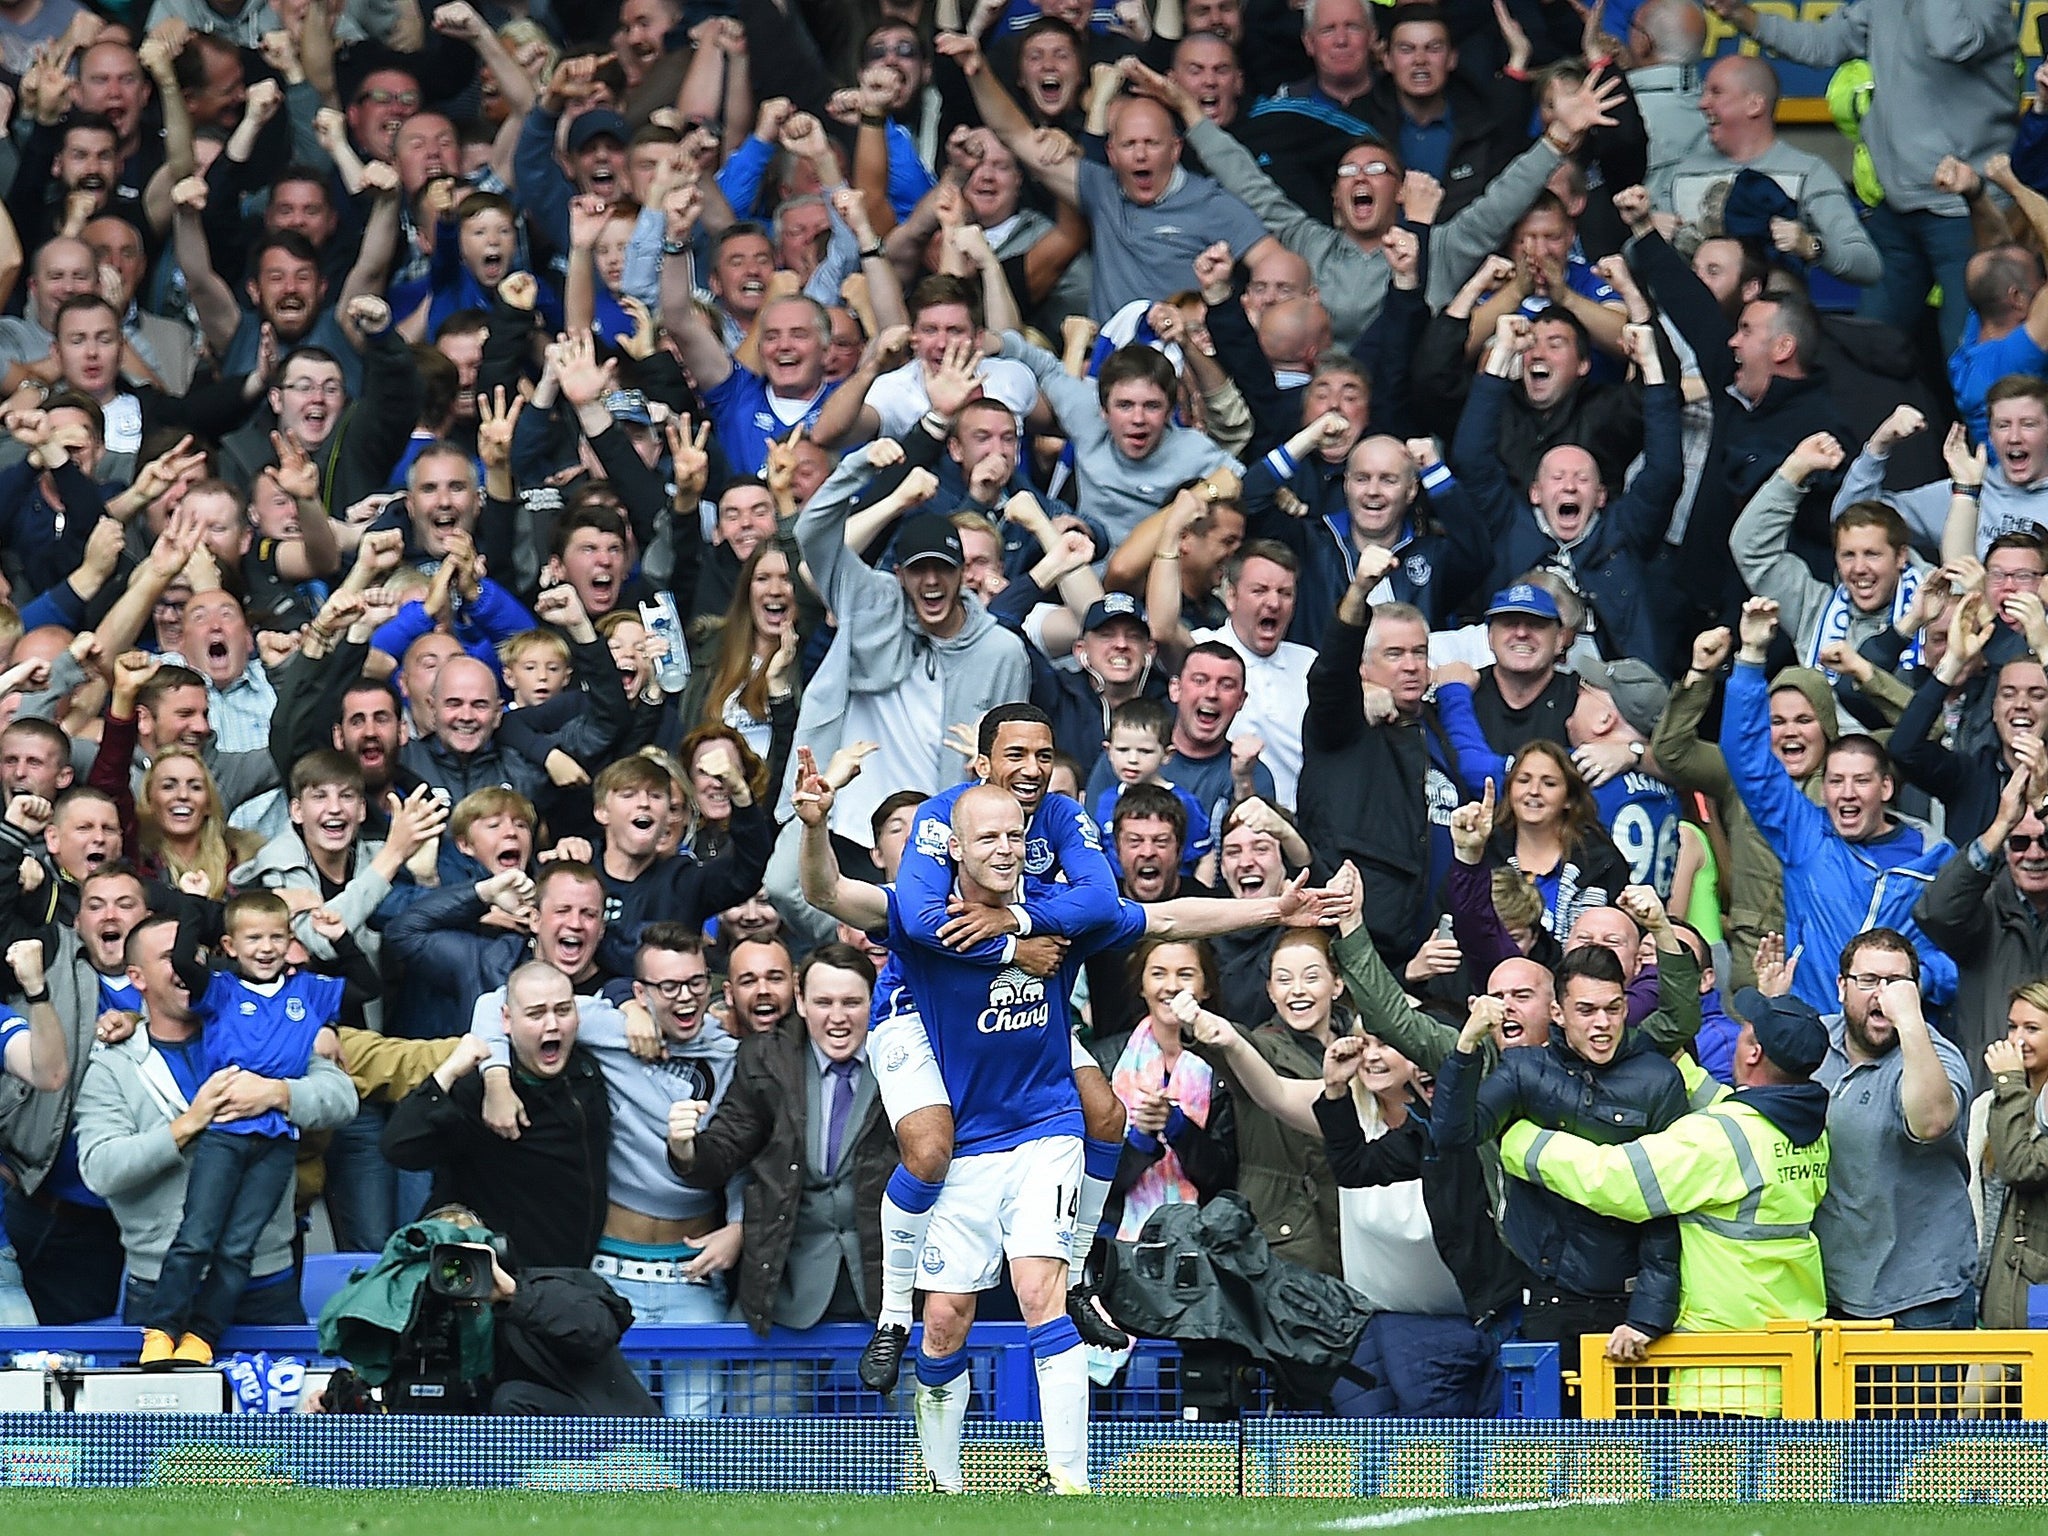 Steven Naismith scored a hat-trick for Everton